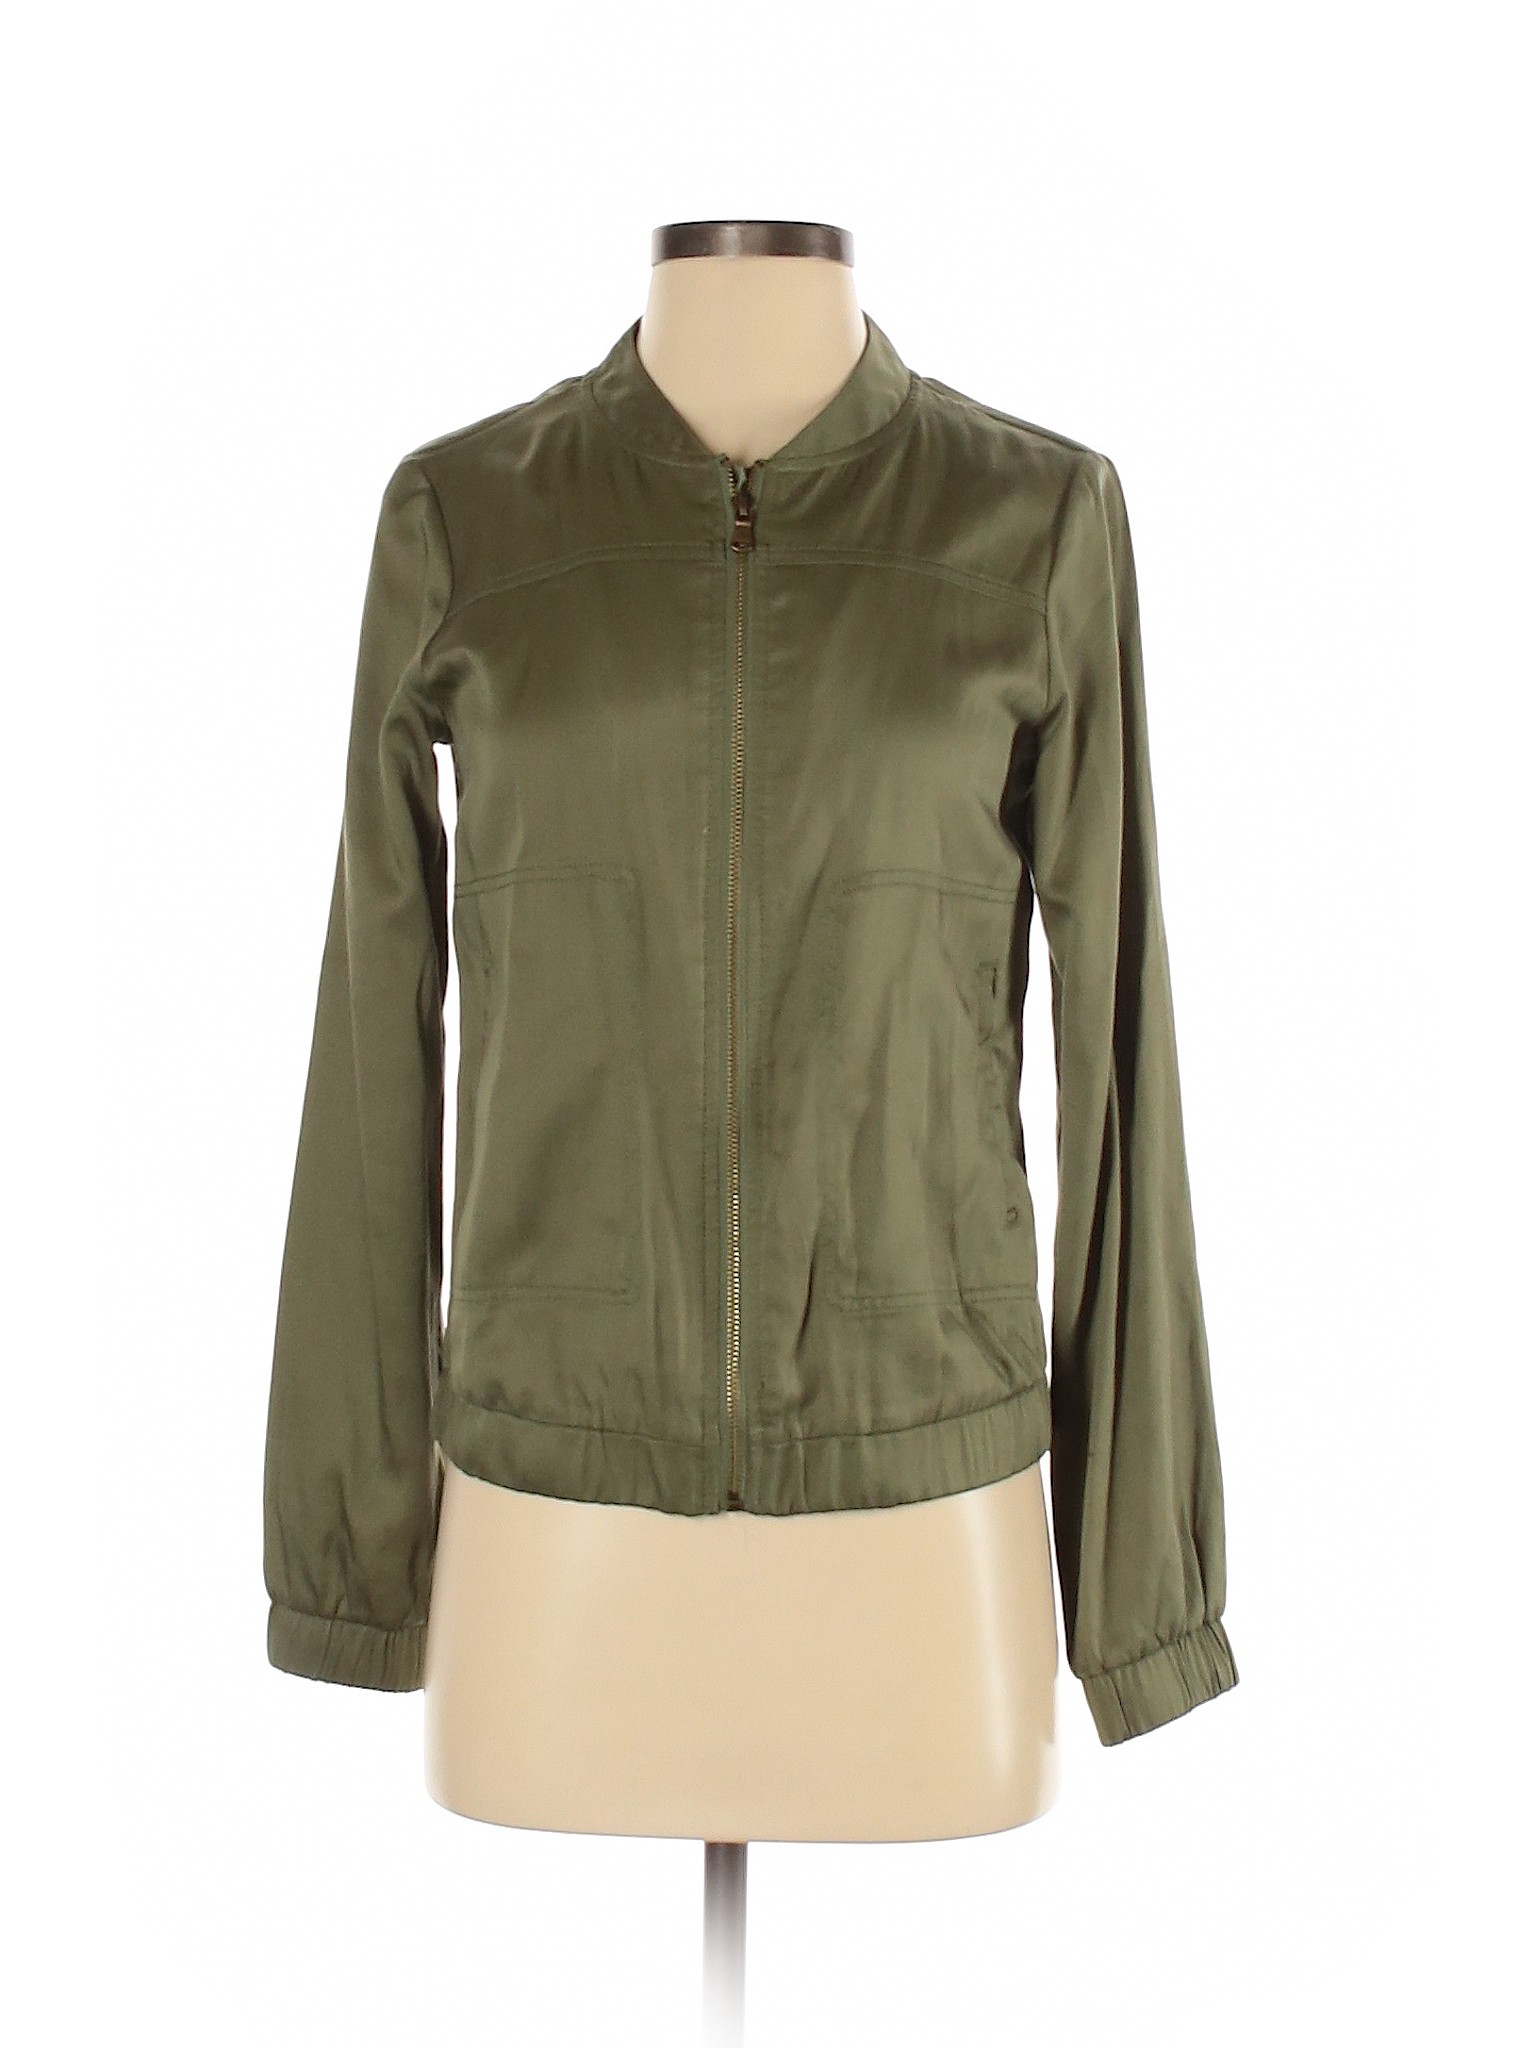 Merona Women Green Jacket XS | eBay